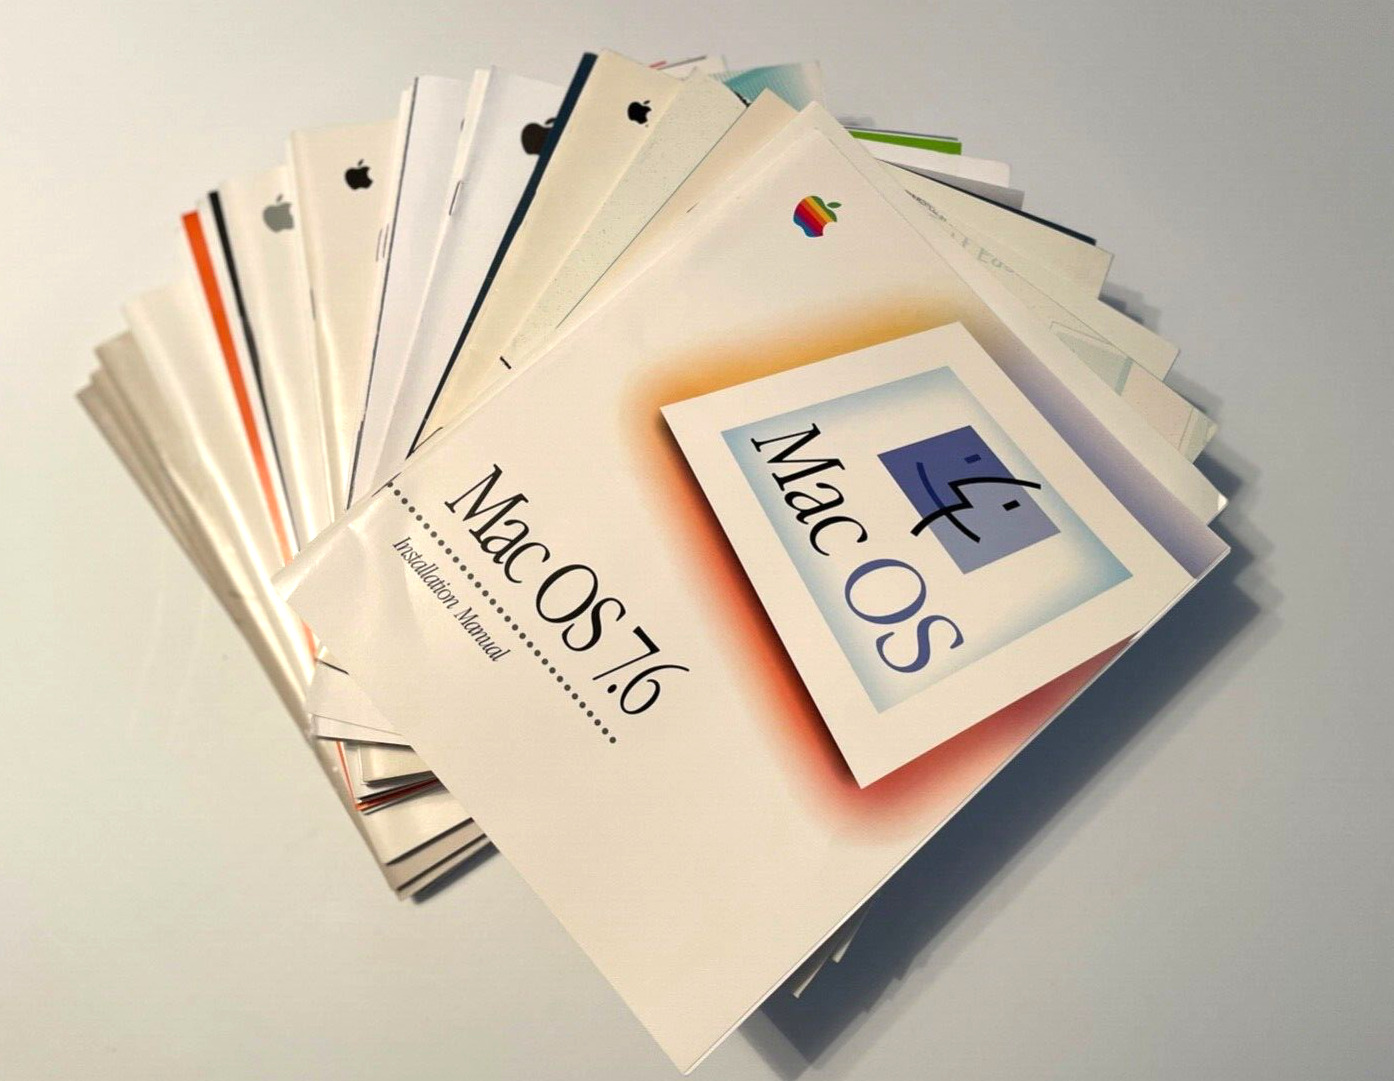 Lot of 36+ Apple Macintosh user manuals and literature